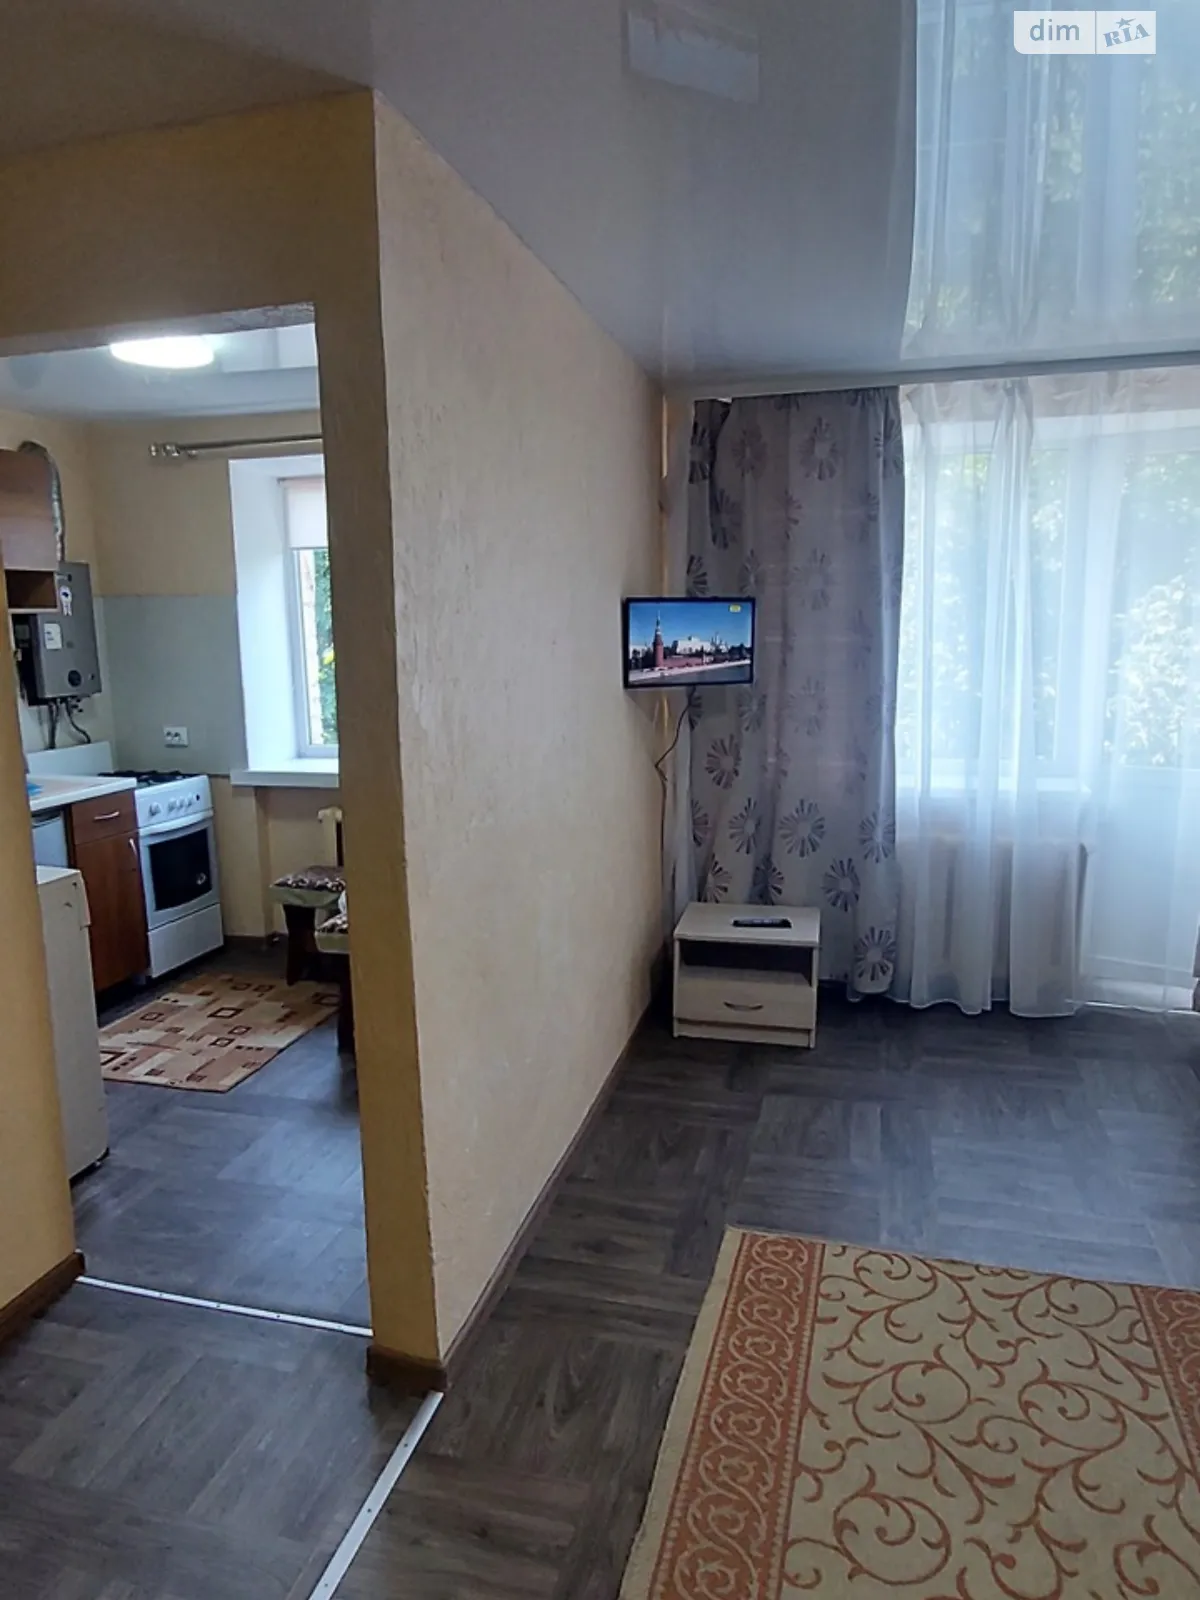 Сдается в аренду 2-комнатная квартира в Ровно - фото 3